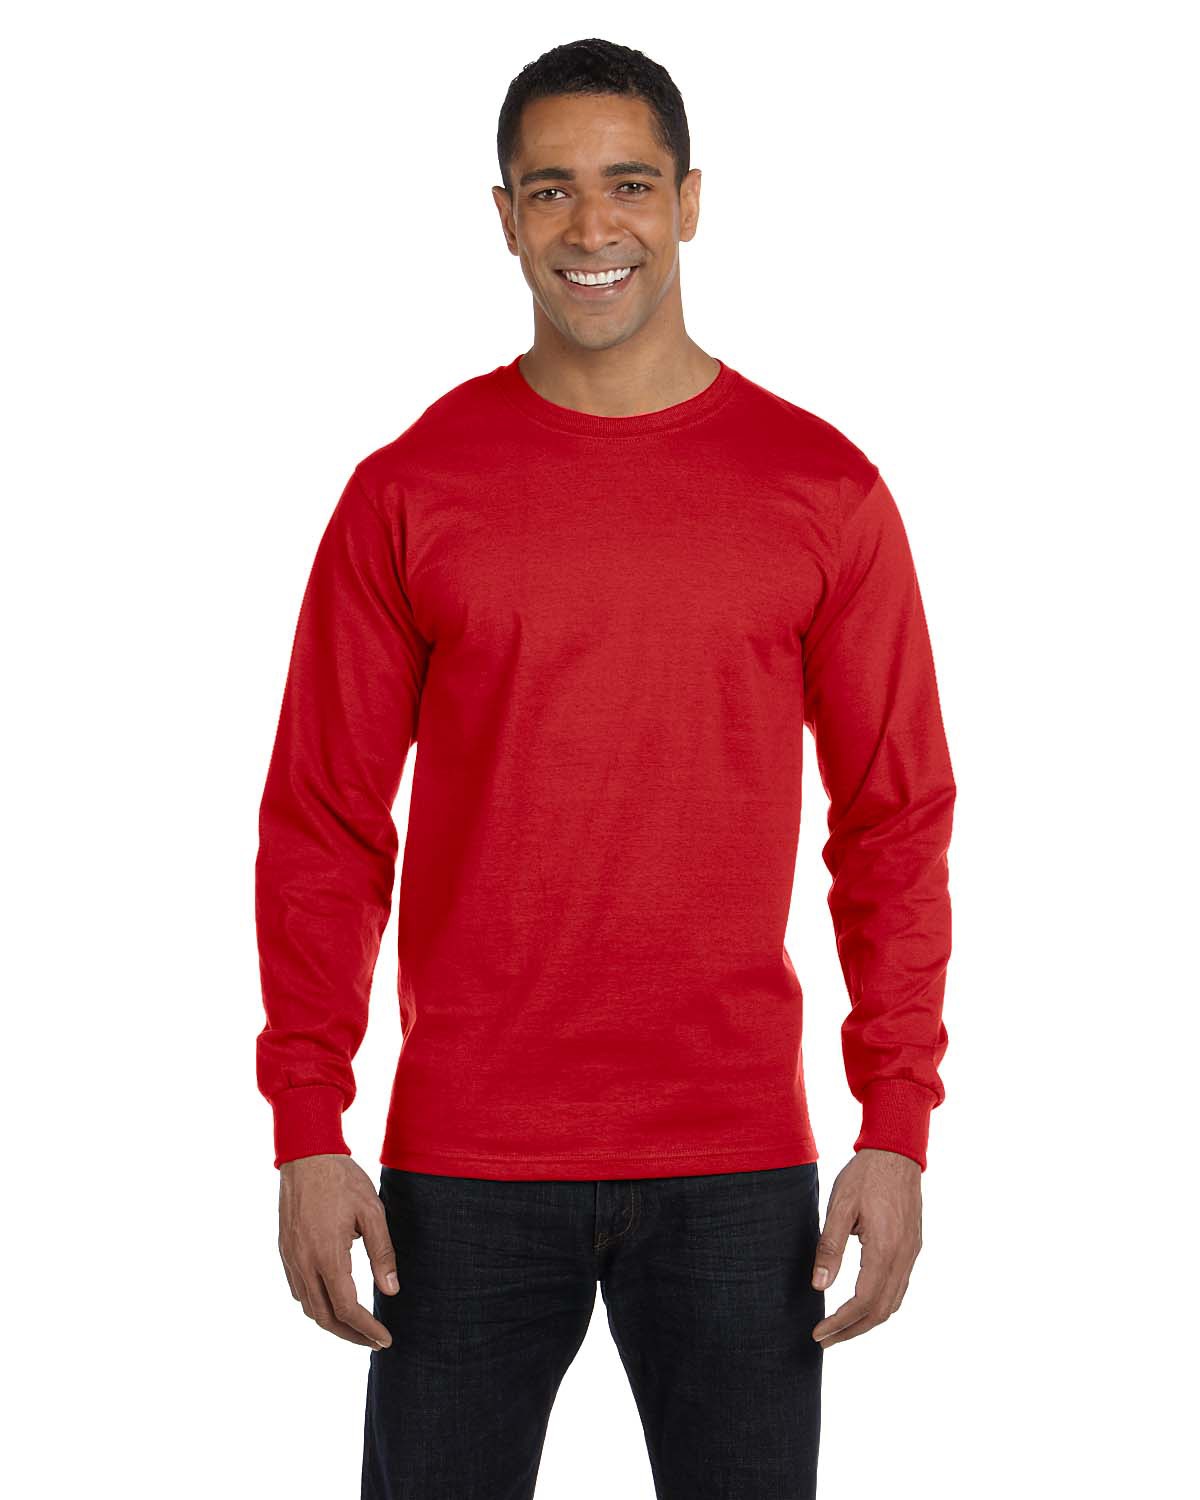 Gildan G8400 - Adult Gildan DryBlend Long-Sleeve T-Shirt $5.59 - T-Shirts